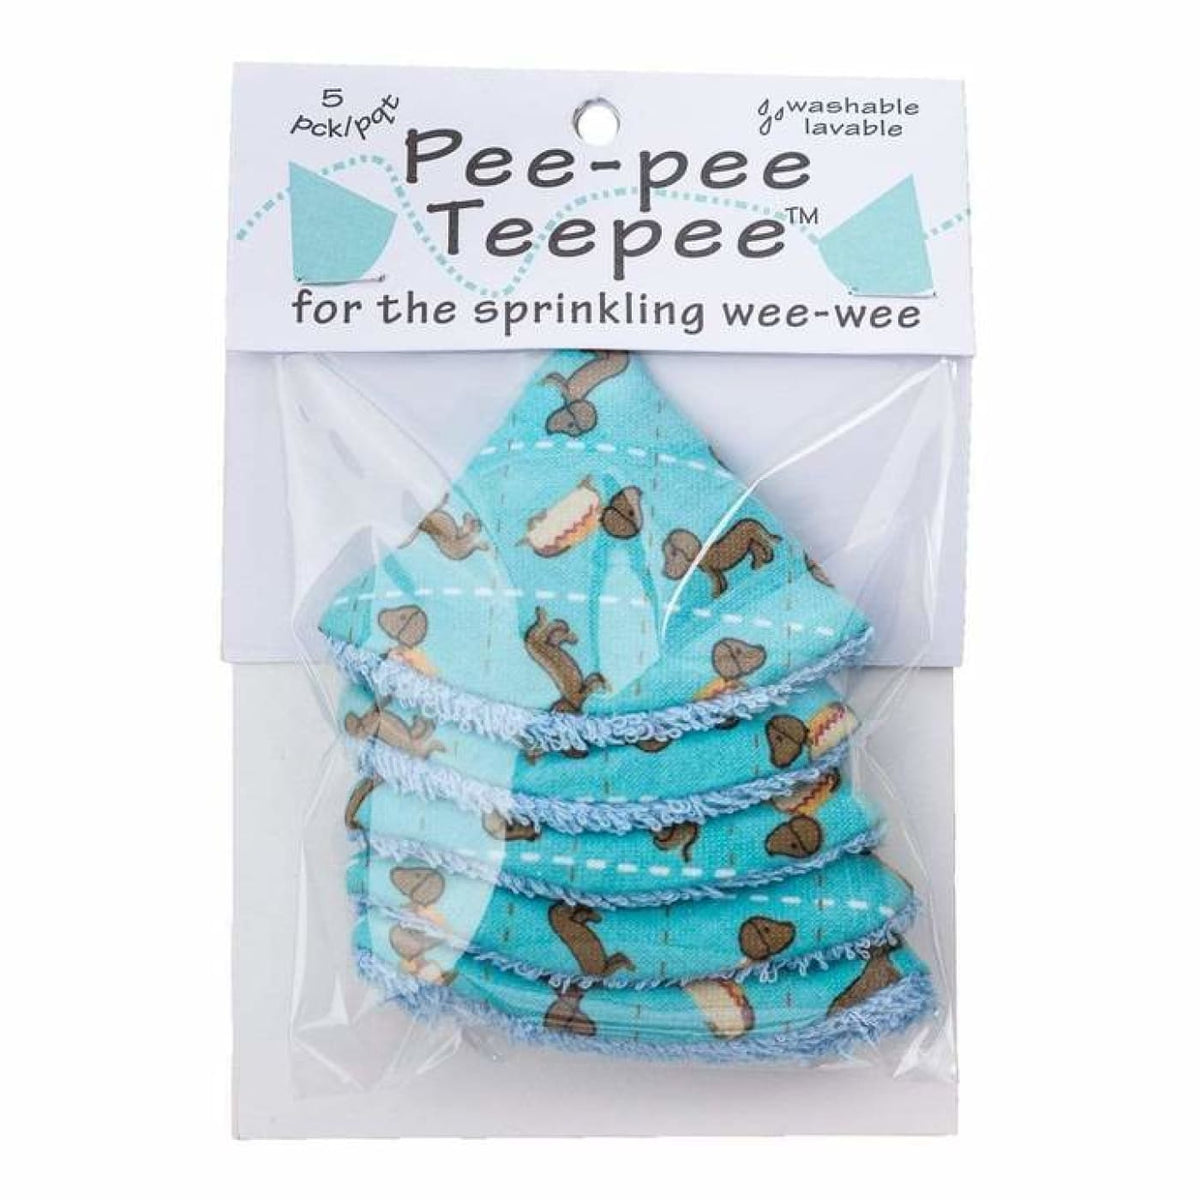 Pee-pee Teepee - Wiener Dog - Wiener Dog - BATHTIME &amp; CHANGING - NAPPIES/WIPES/ACCESSORIES